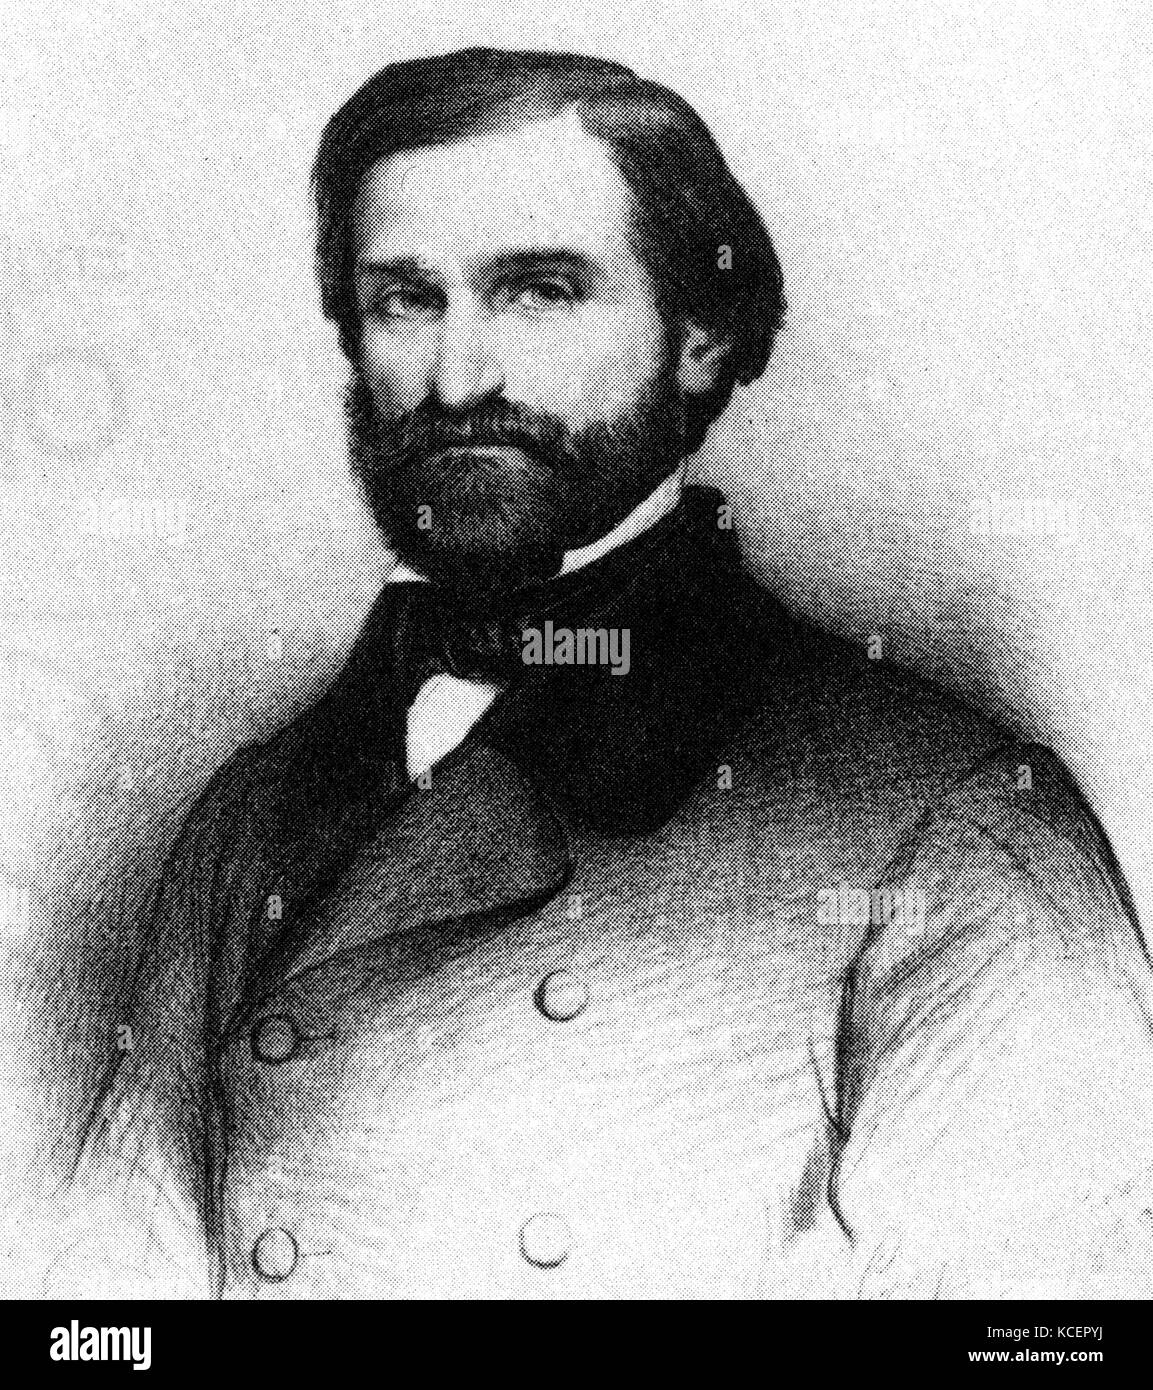 Retrato de Giuseppe Verdi (1813-1901), un compositor de ópera italiana. Fecha del siglo XIX Foto de stock